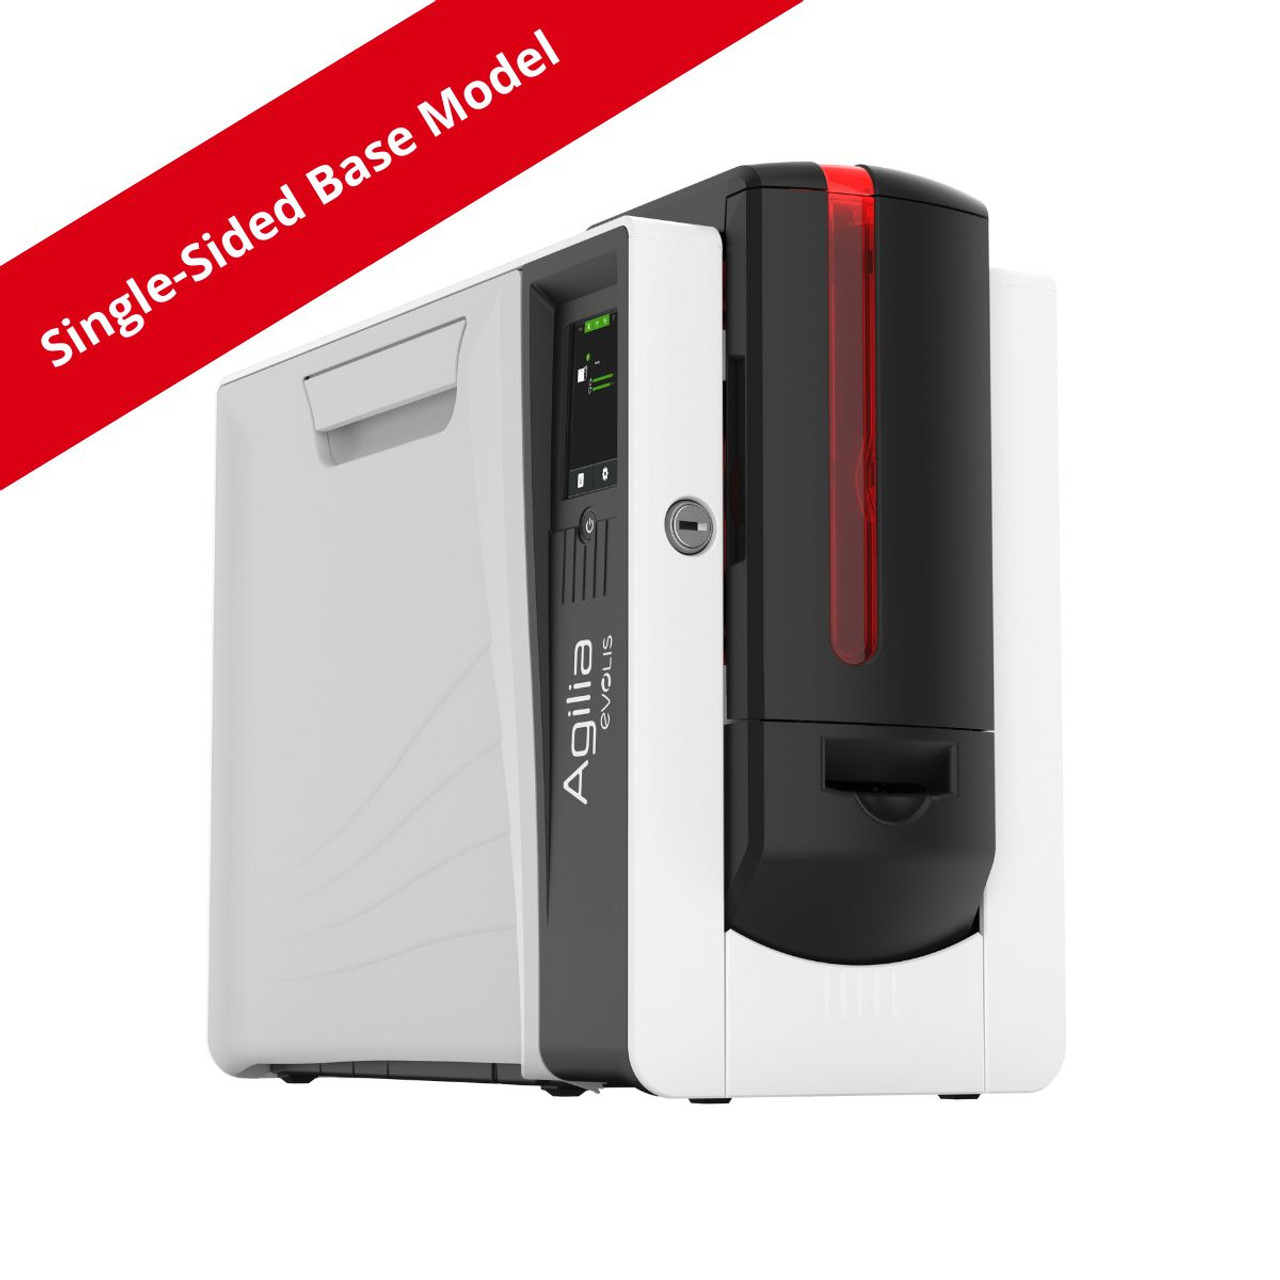 Evolis Agilia Expert Single-Sided Retransfer ID Card Printer - AG1-0001